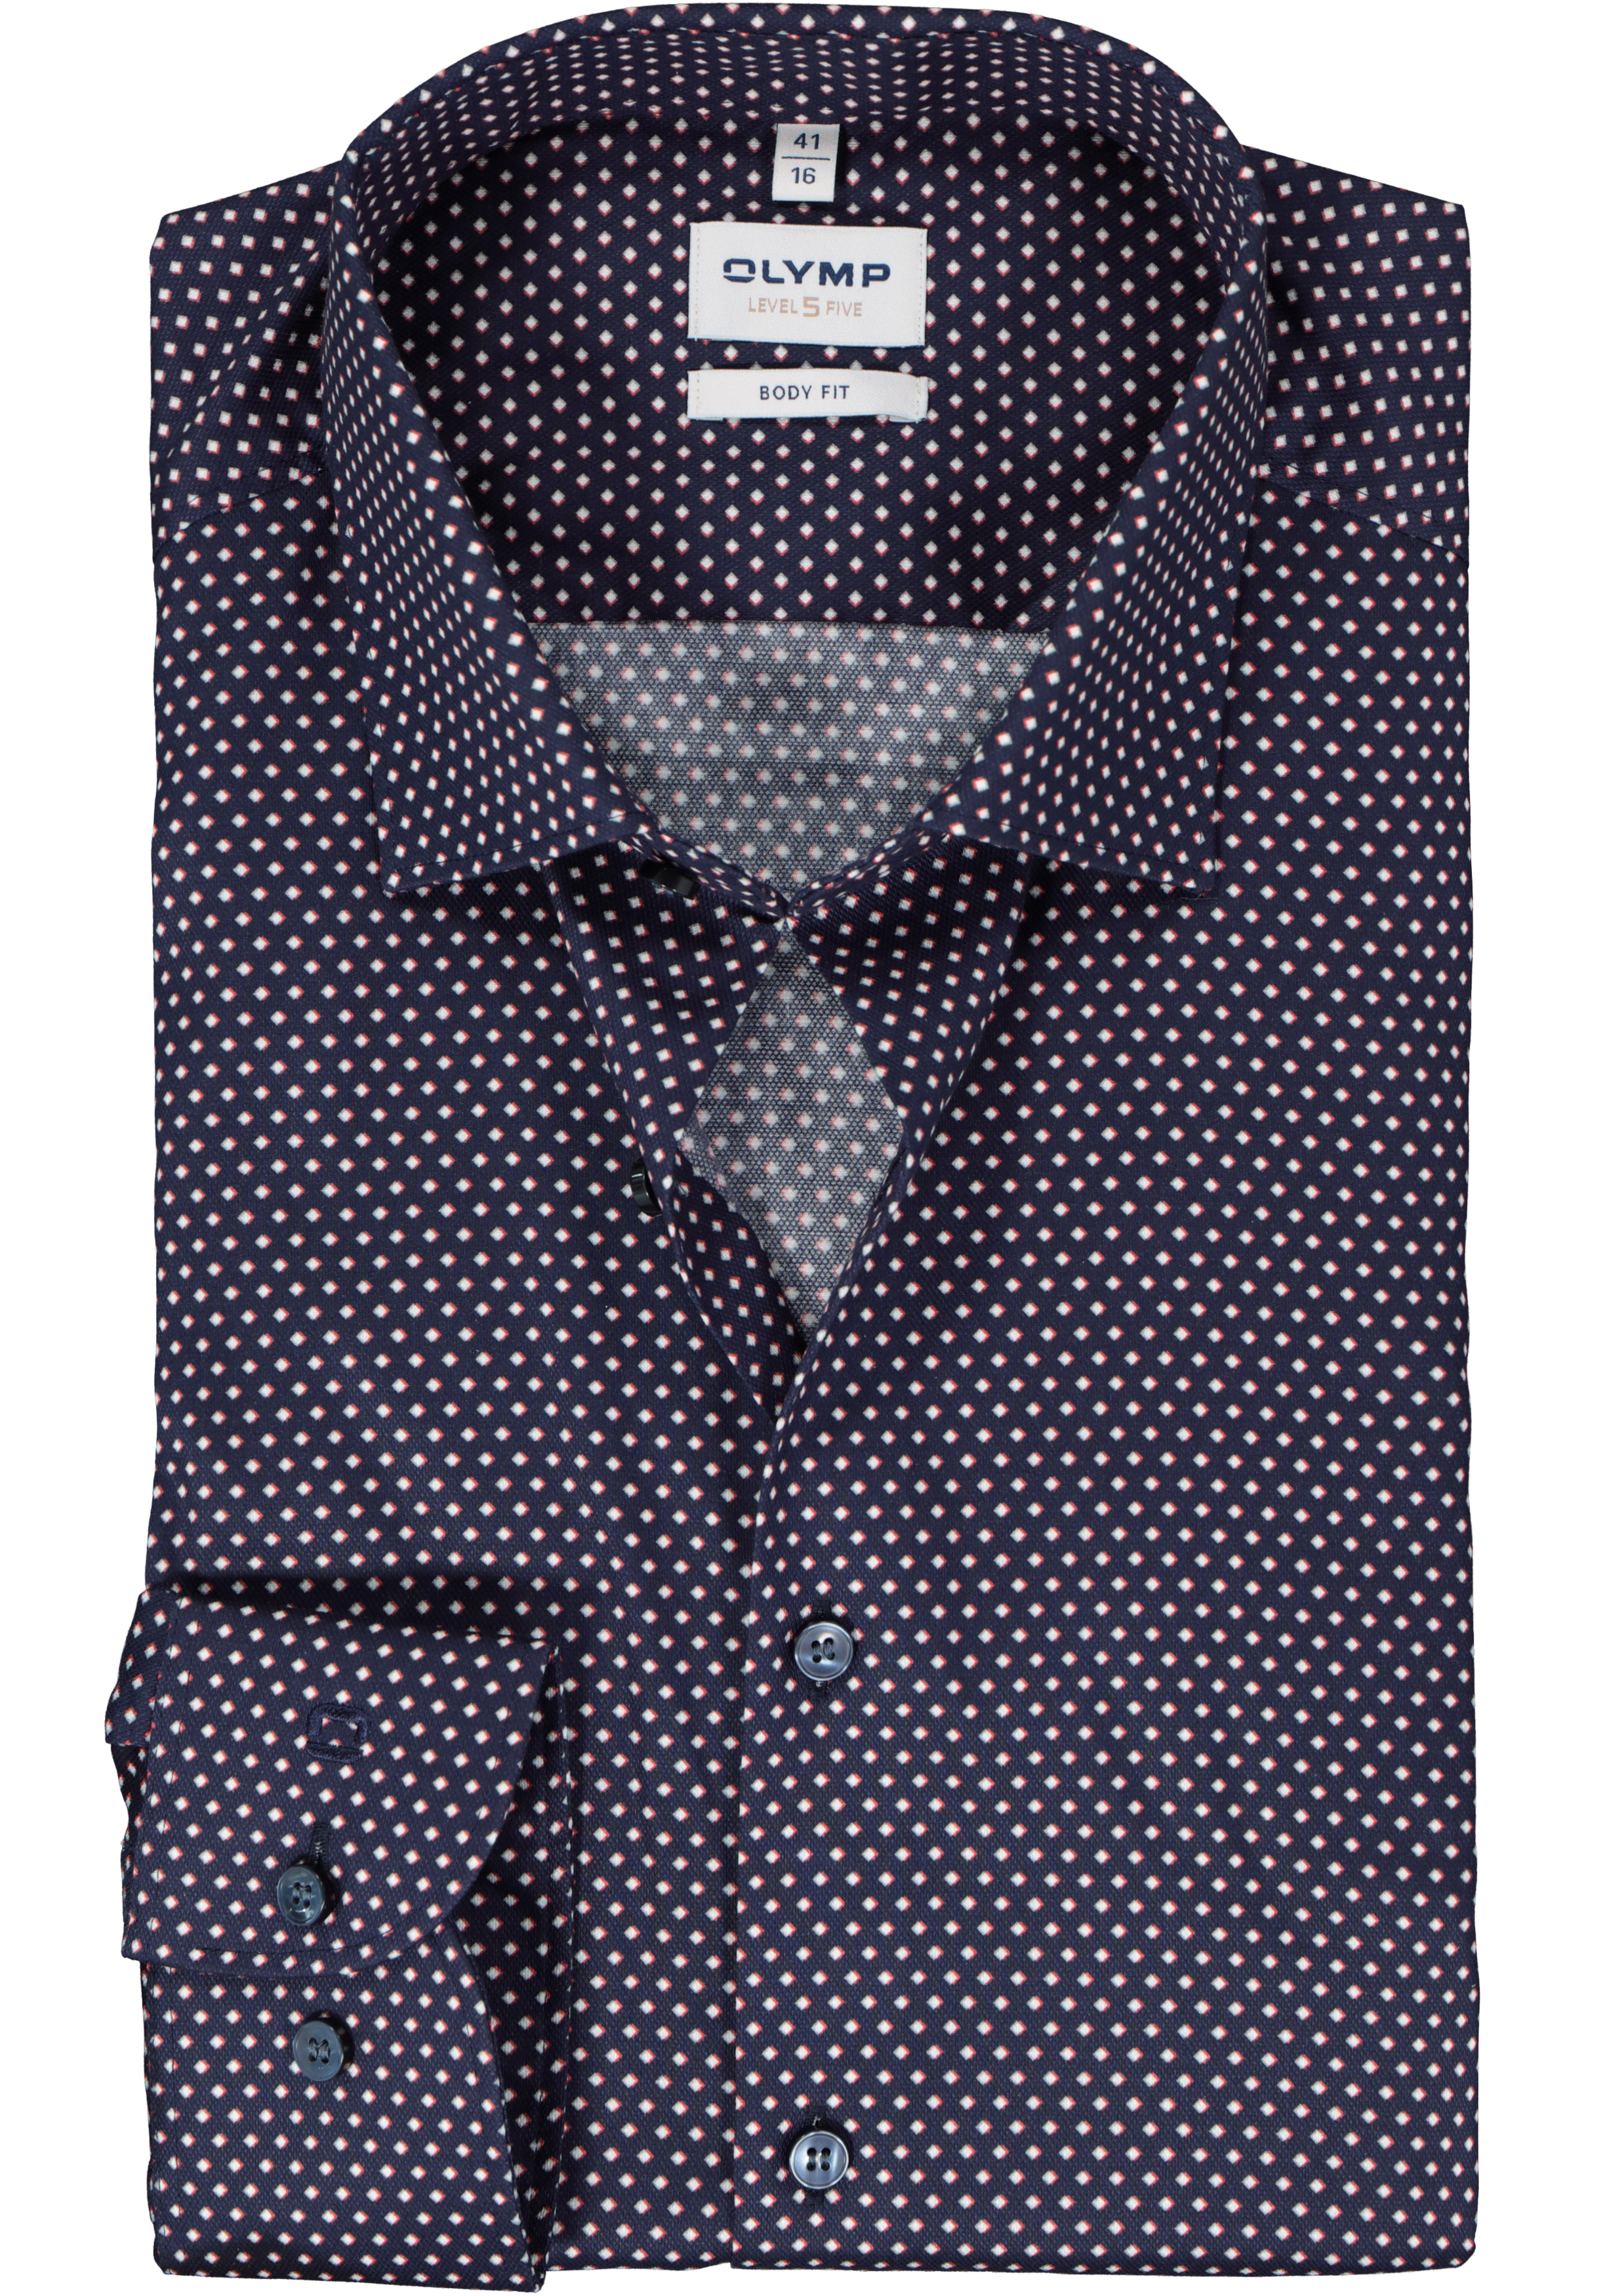 OLYMP Level 5 body fit overhemd, mouwlengte 7, structuur, donkerblauw met rood en wit dessin